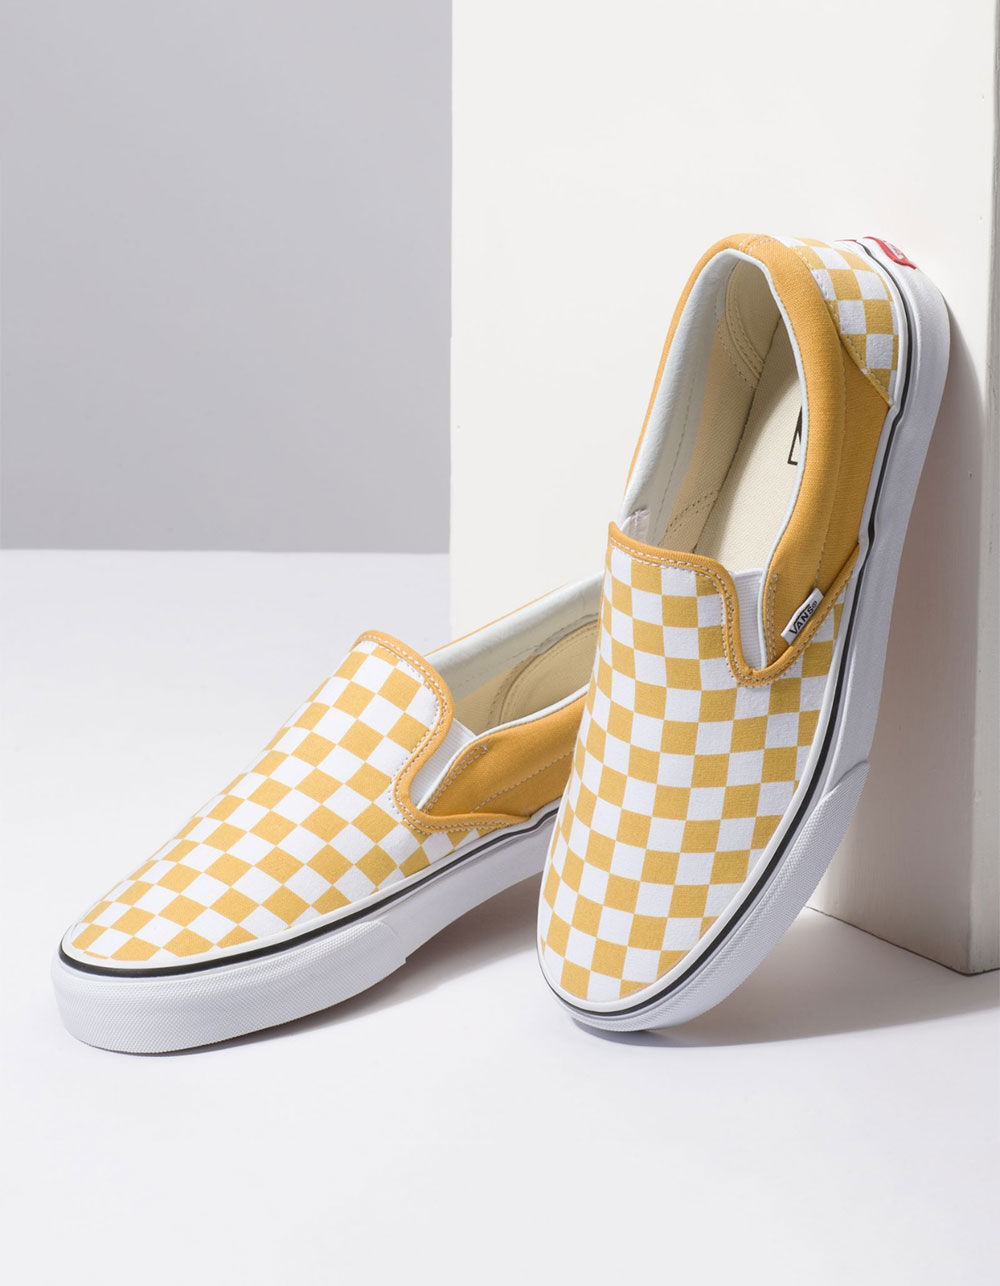 VANS Checkerboard Yellow & True White Womens Slip-On Shoes